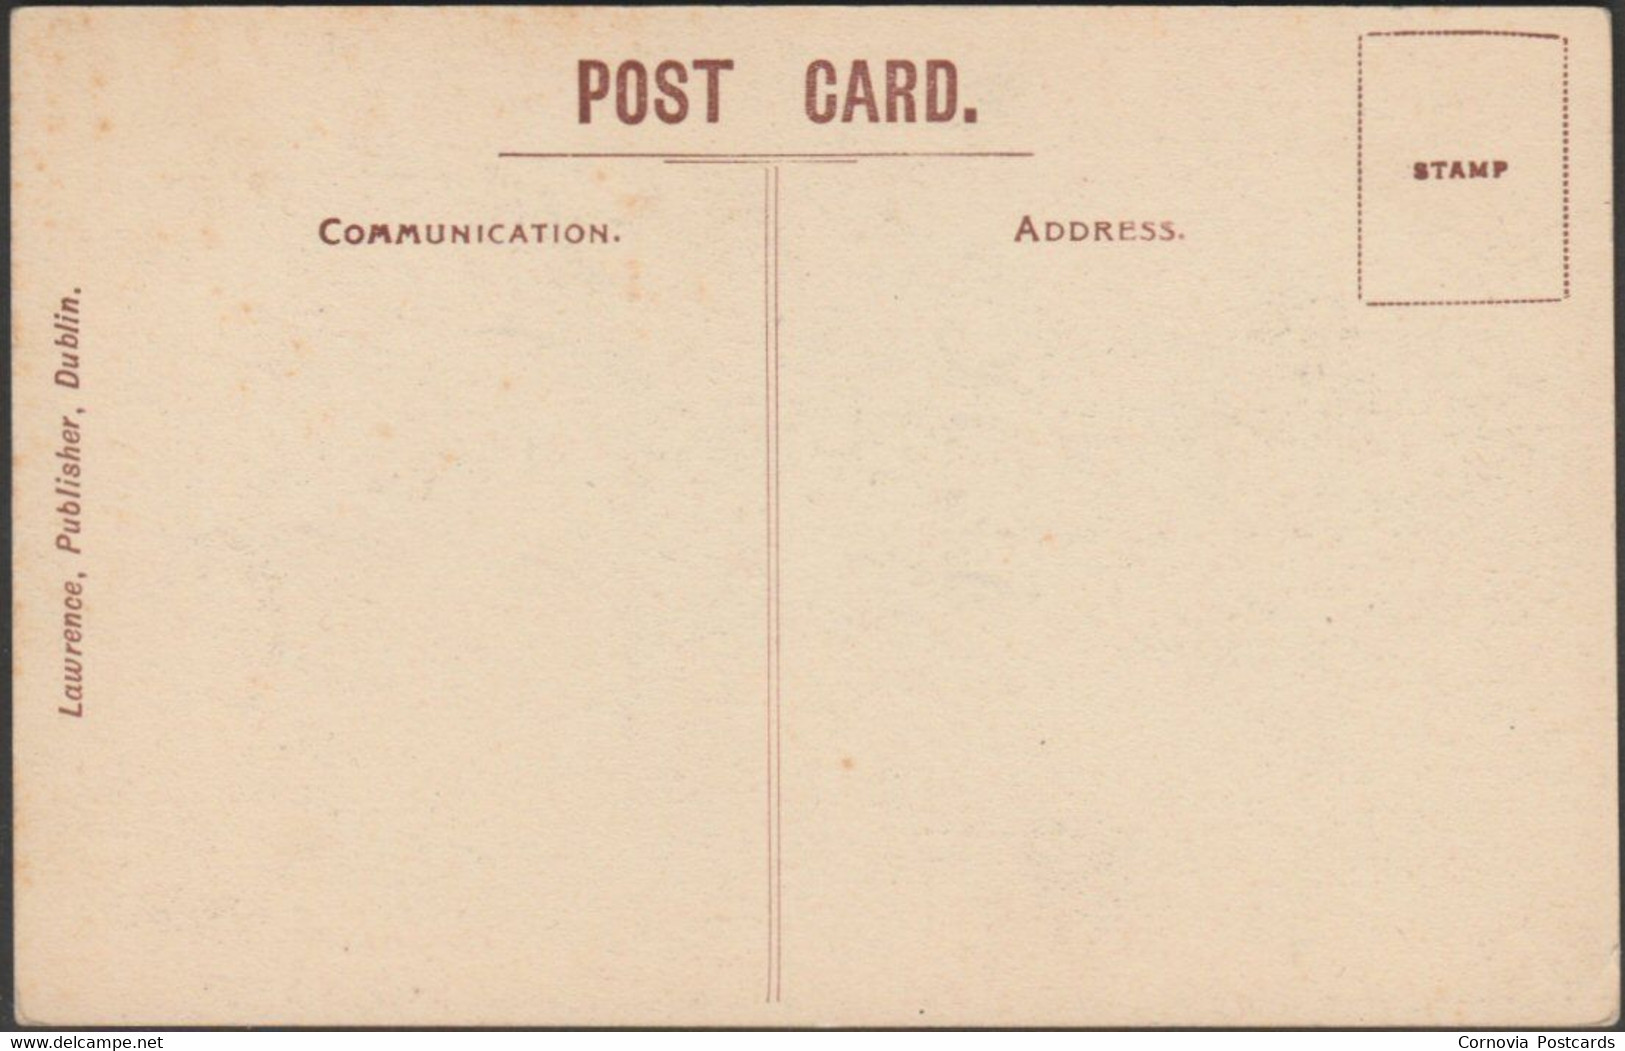 The Gateway, Glendalough, Wicklow, C.1910s - Lawrence Postcard - Wicklow